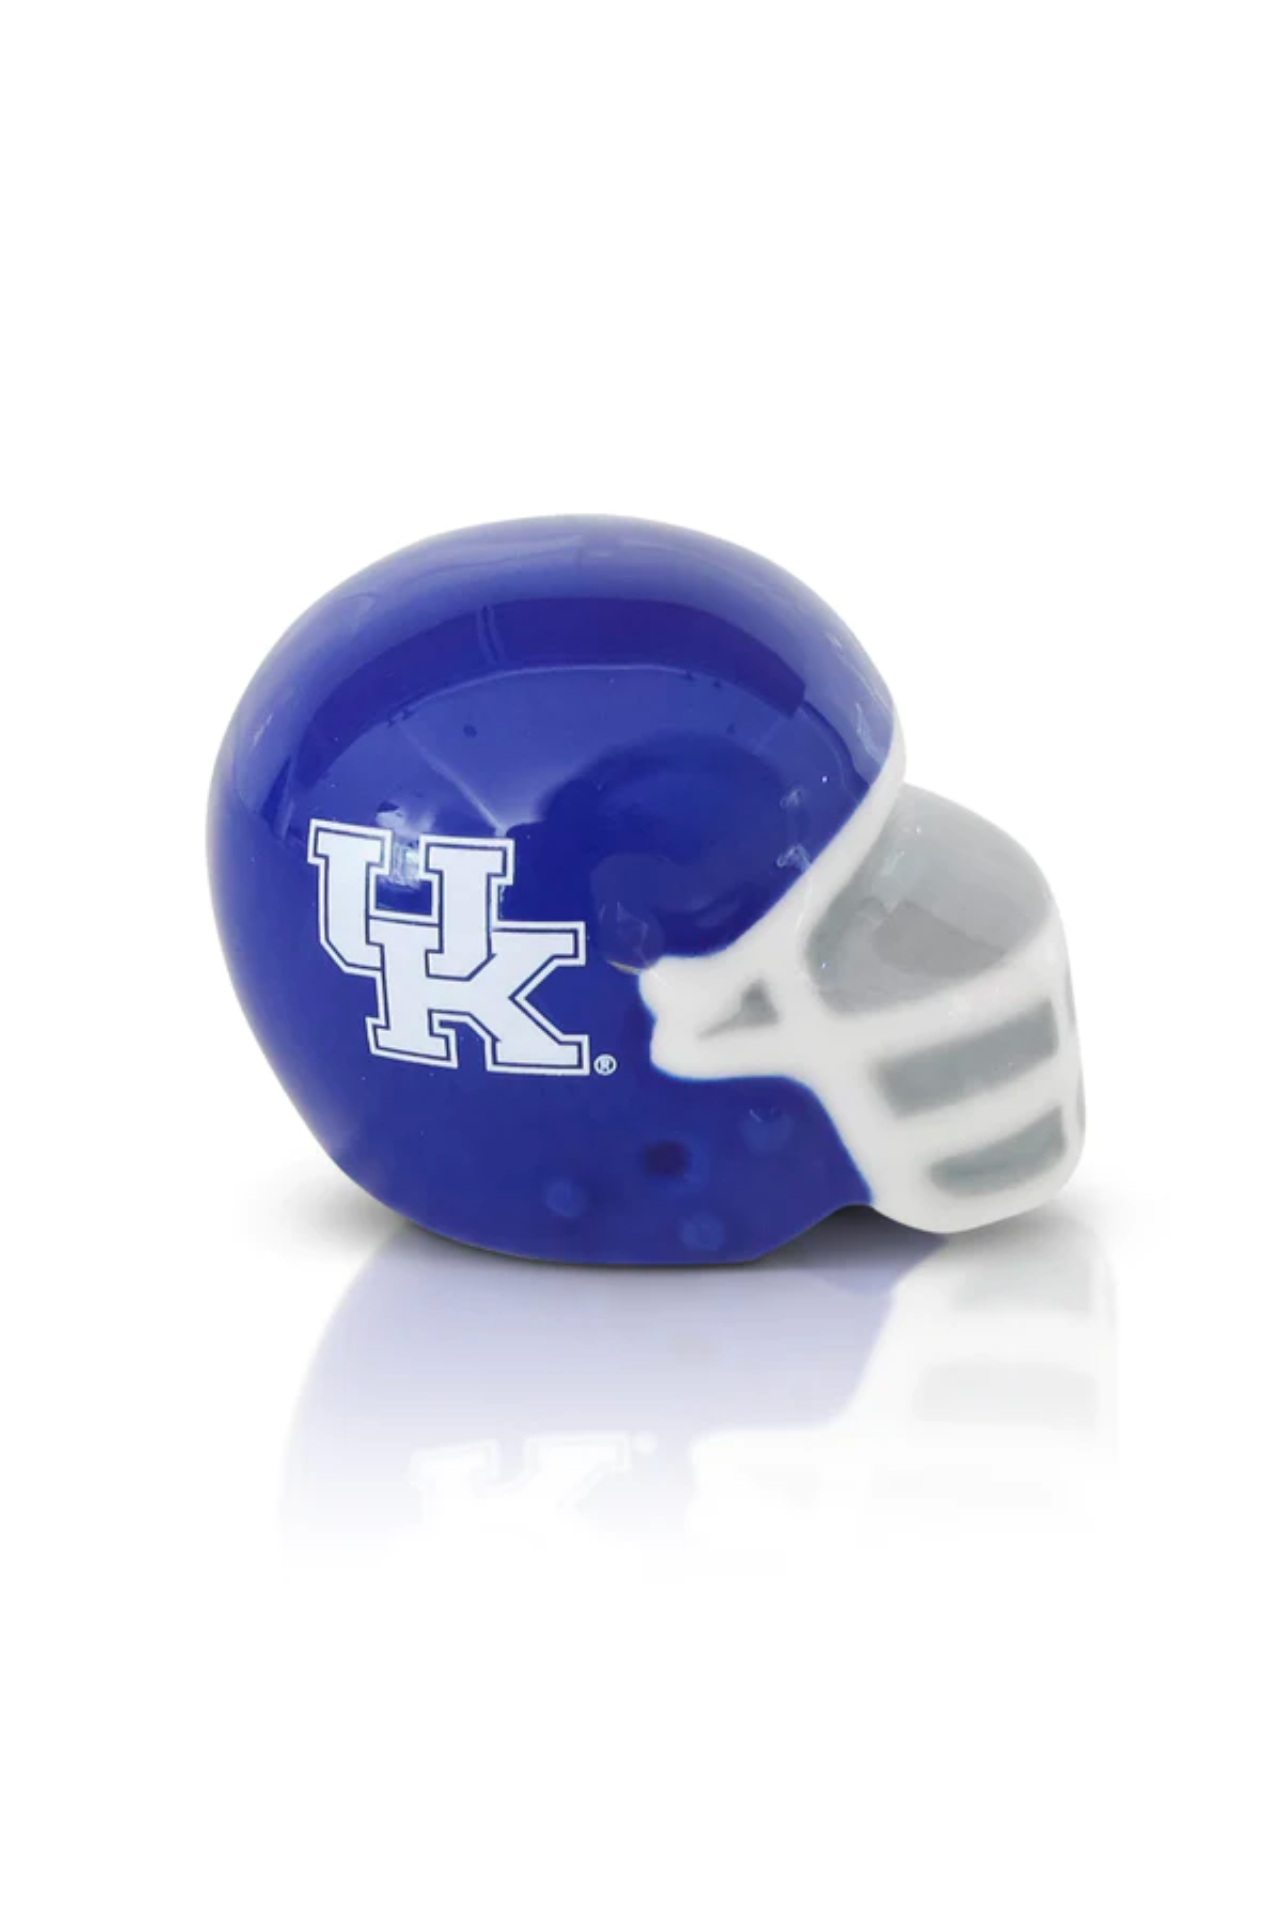 University of Kentucky - Mini Helmet